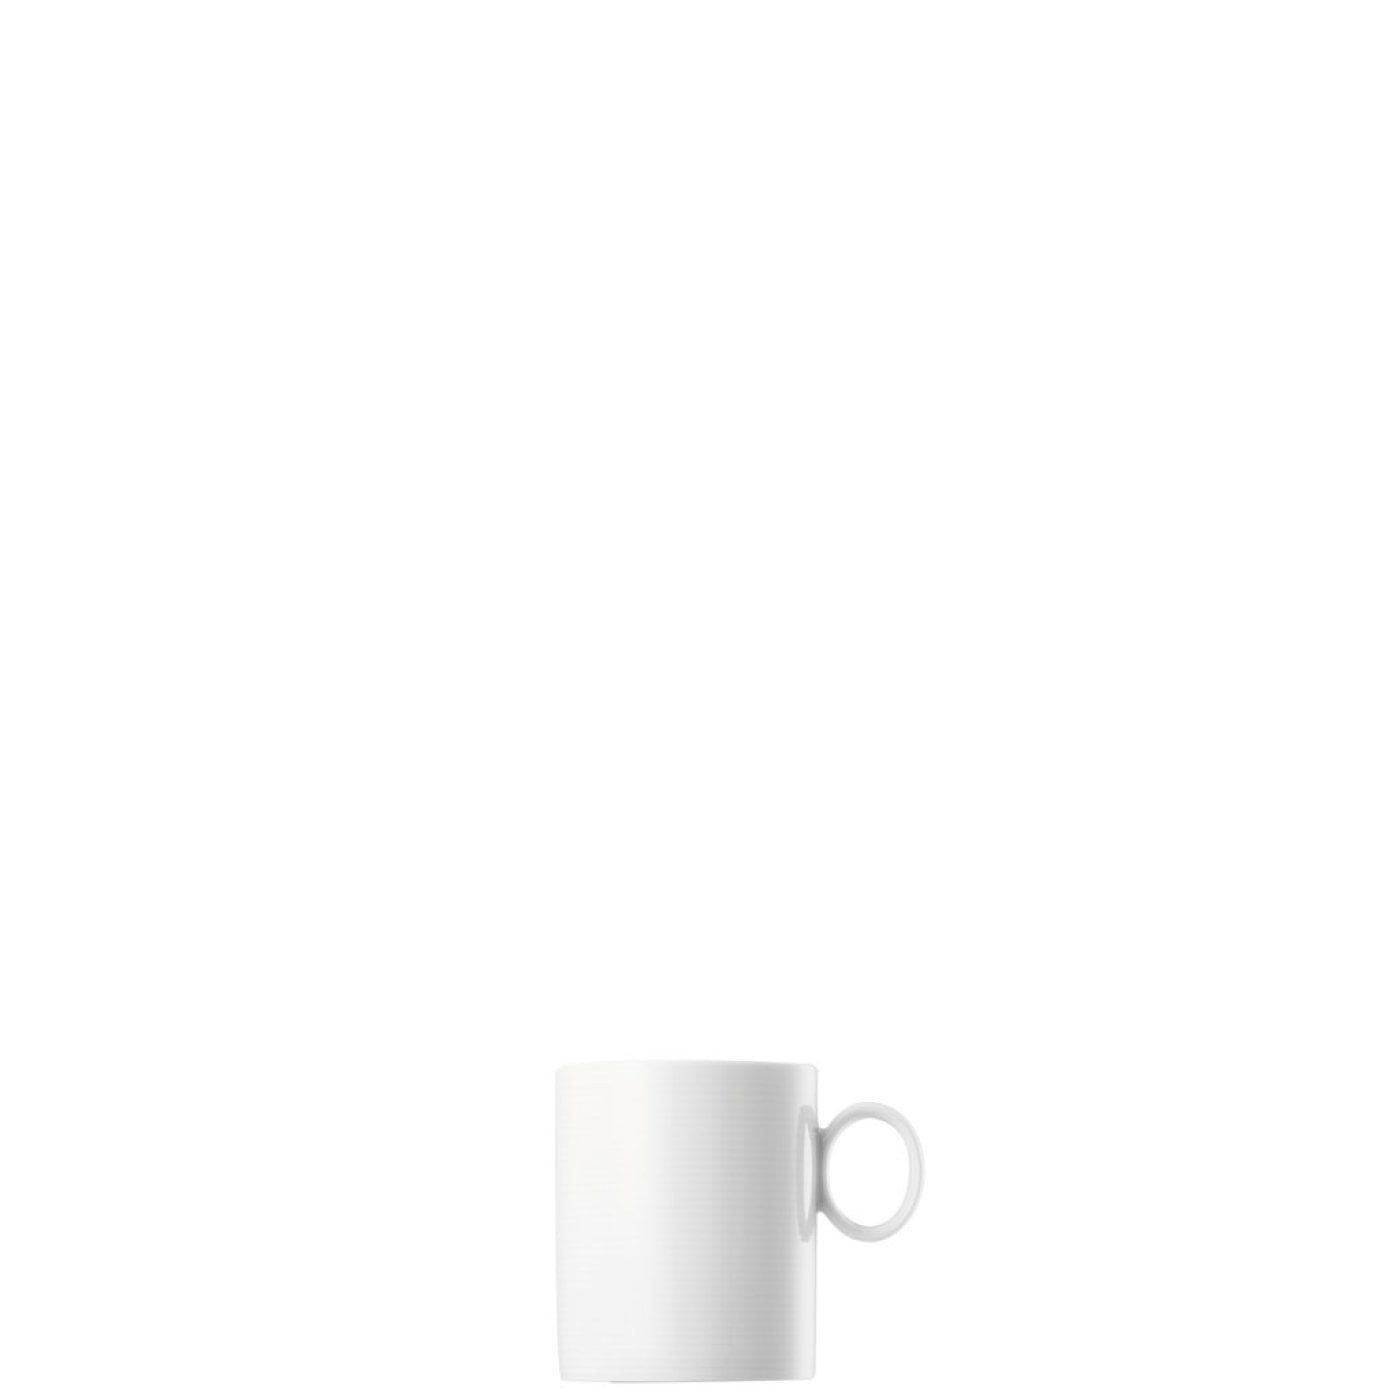 Thomas Porzellan Becher Becher mit l Stück, Weiß 0.38 Porzellan, LOFT Porzellan, Henkel groß mikrowellengeeignet - und - 1 spülmaschinenfest